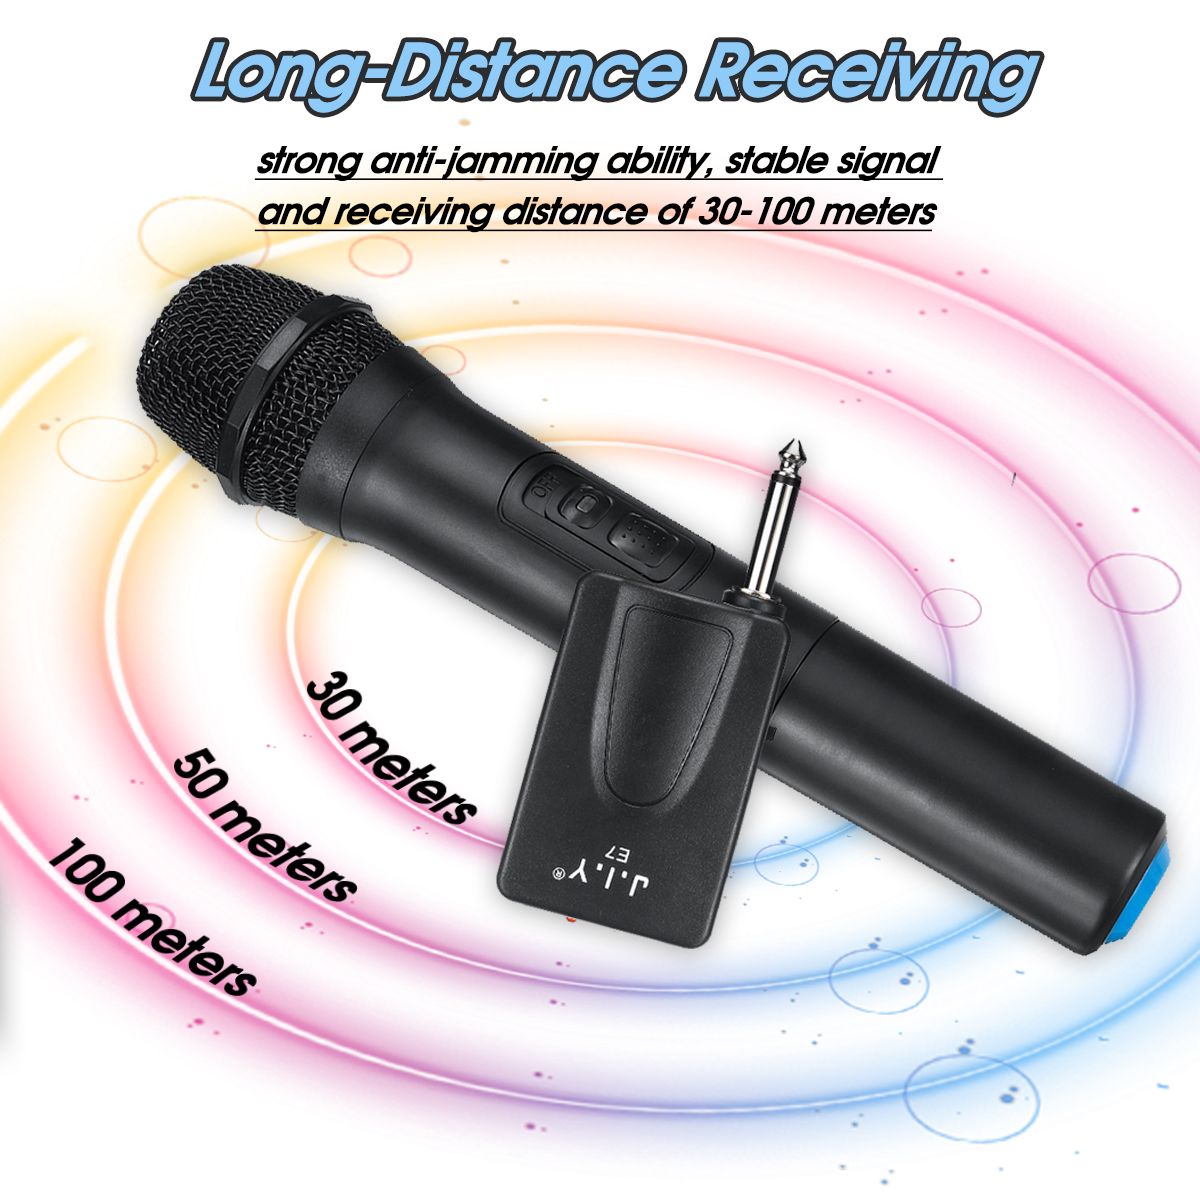 2Pcs-VHF-Wireless-Bluetooth-Karaoke-Microphone-Speaker-2-Handheld-MIC-KTV-Player-1496443